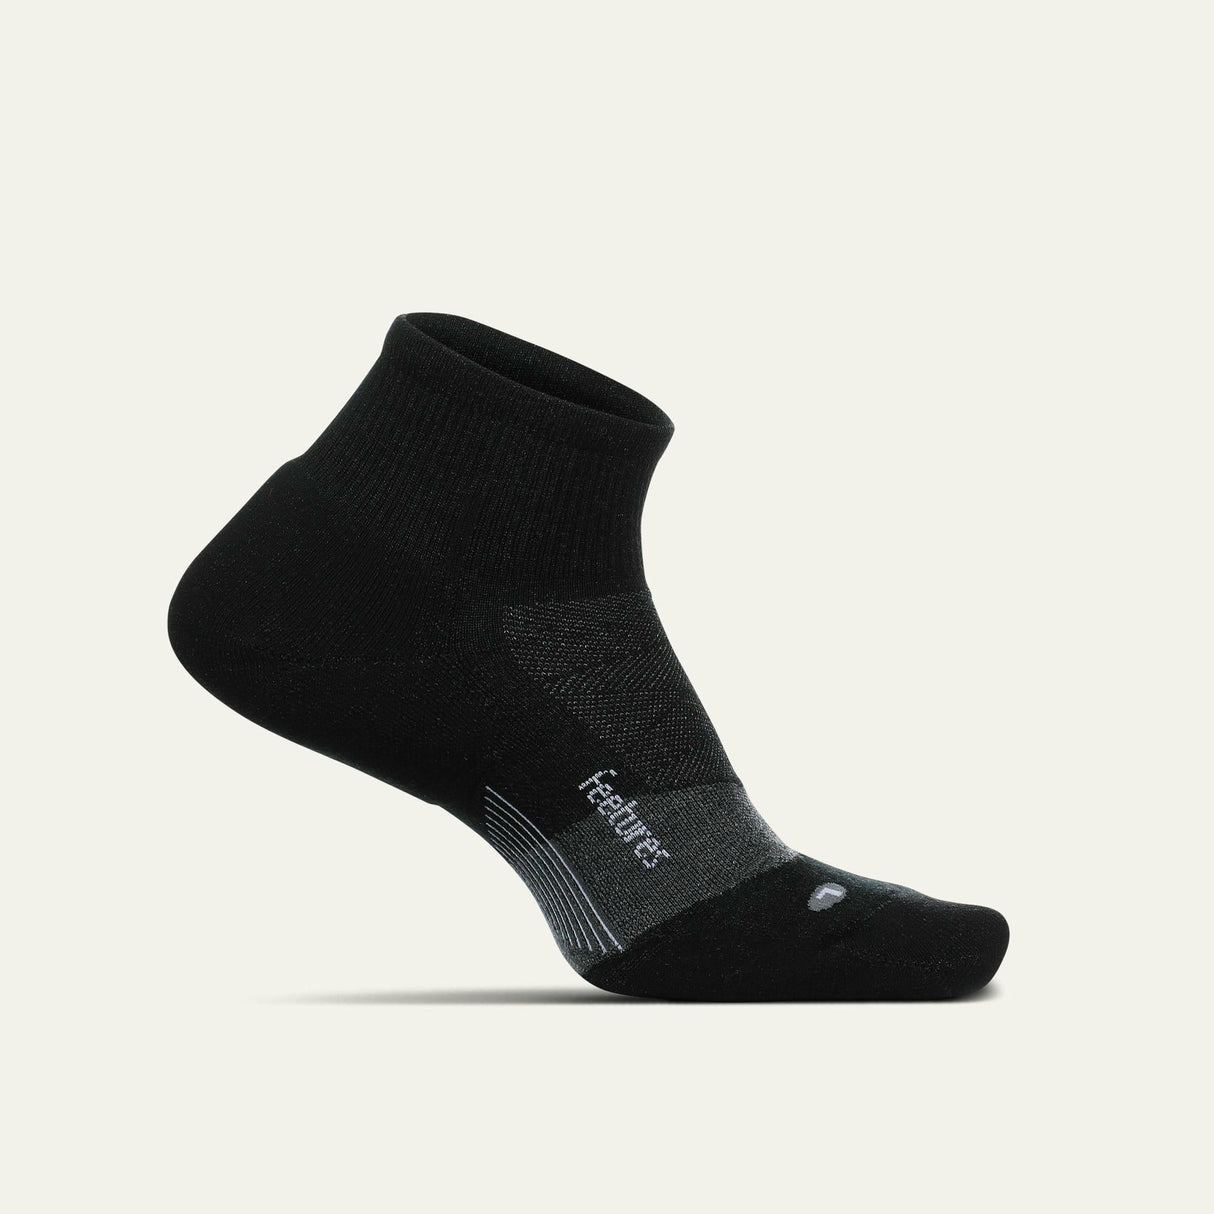 Feetures Merino 10 Ultra Light Quarter Socks  -  Small / Charcoal